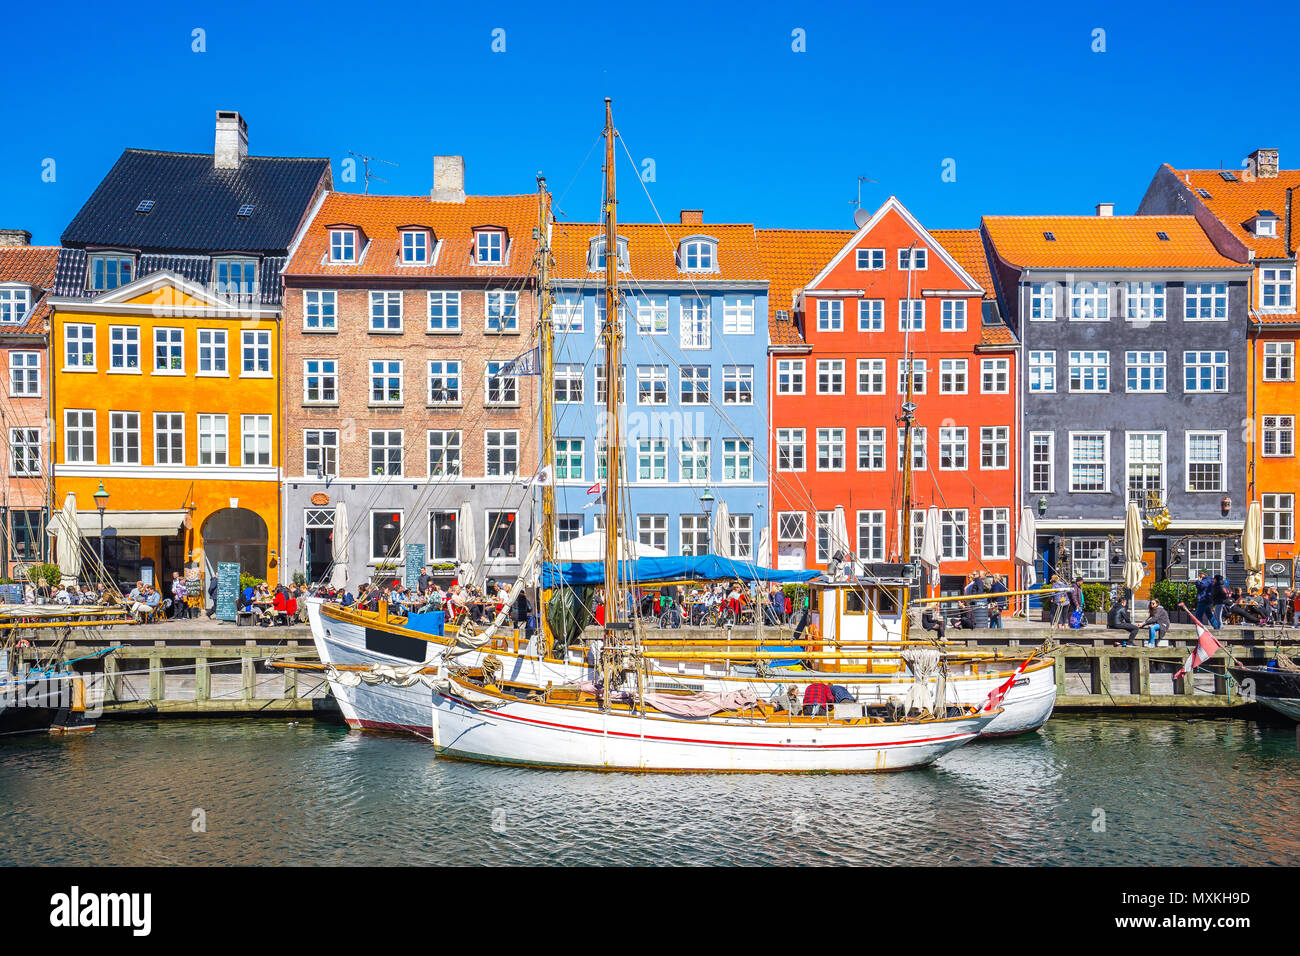 Das Hafenviertel Nyhavn Kanal in Kopenhagen, Dänemark. Stockfoto